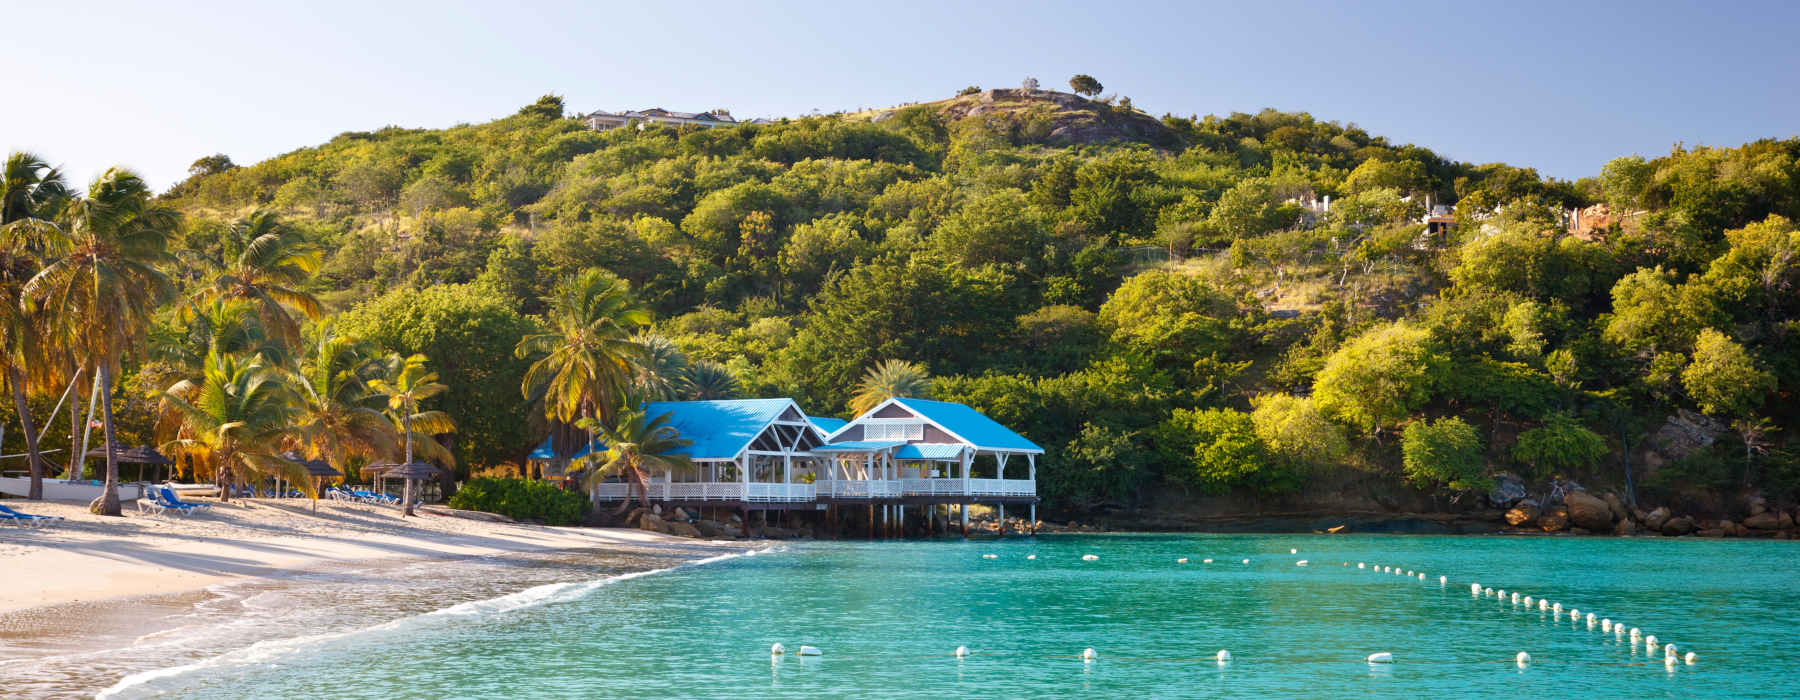 All our Antigua and Barbuda<br class="hidden-md hidden-lg" /> Where Can I Go